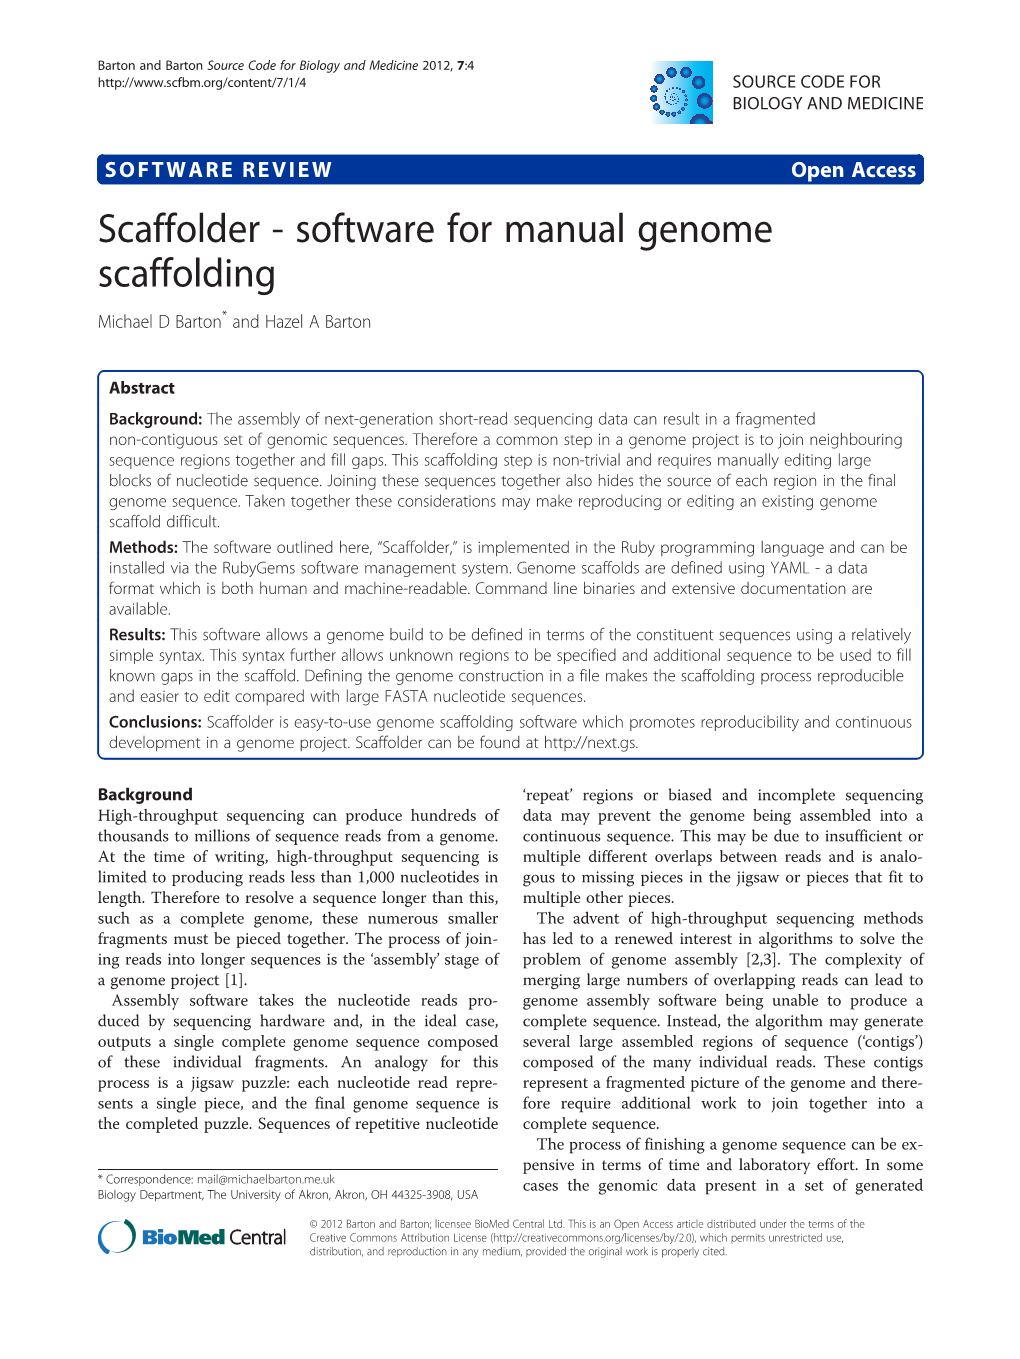 Scaffolder - Software for Manual Genome Scaffolding Michael D Barton* and Hazel a Barton